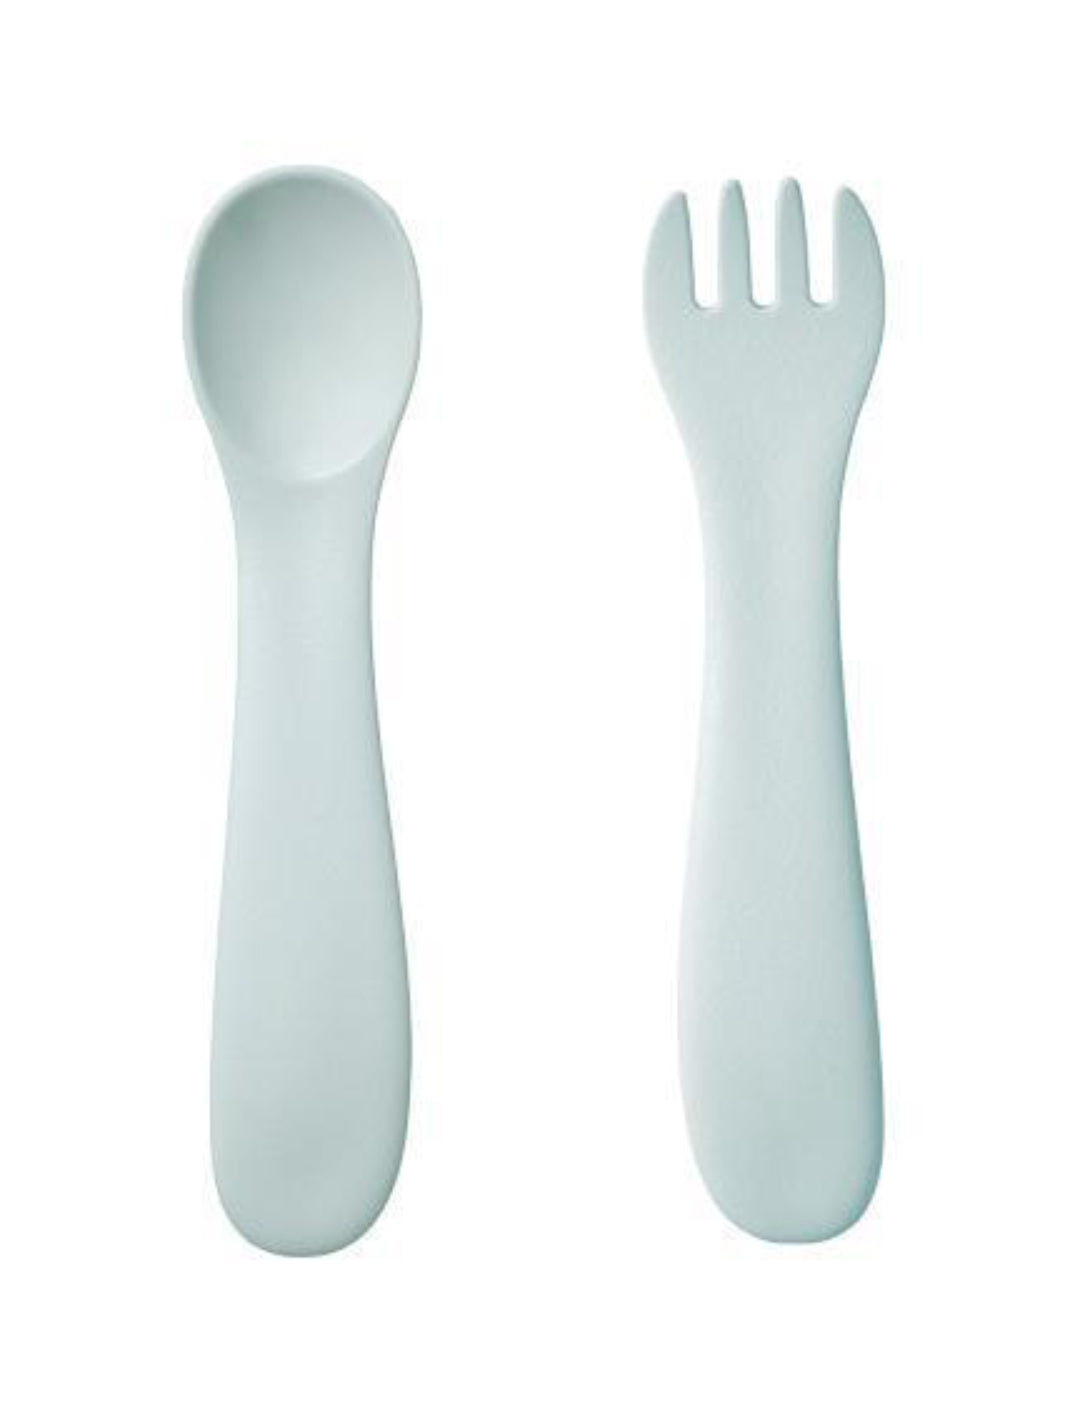 KINTO BONBO Spoon & Fork